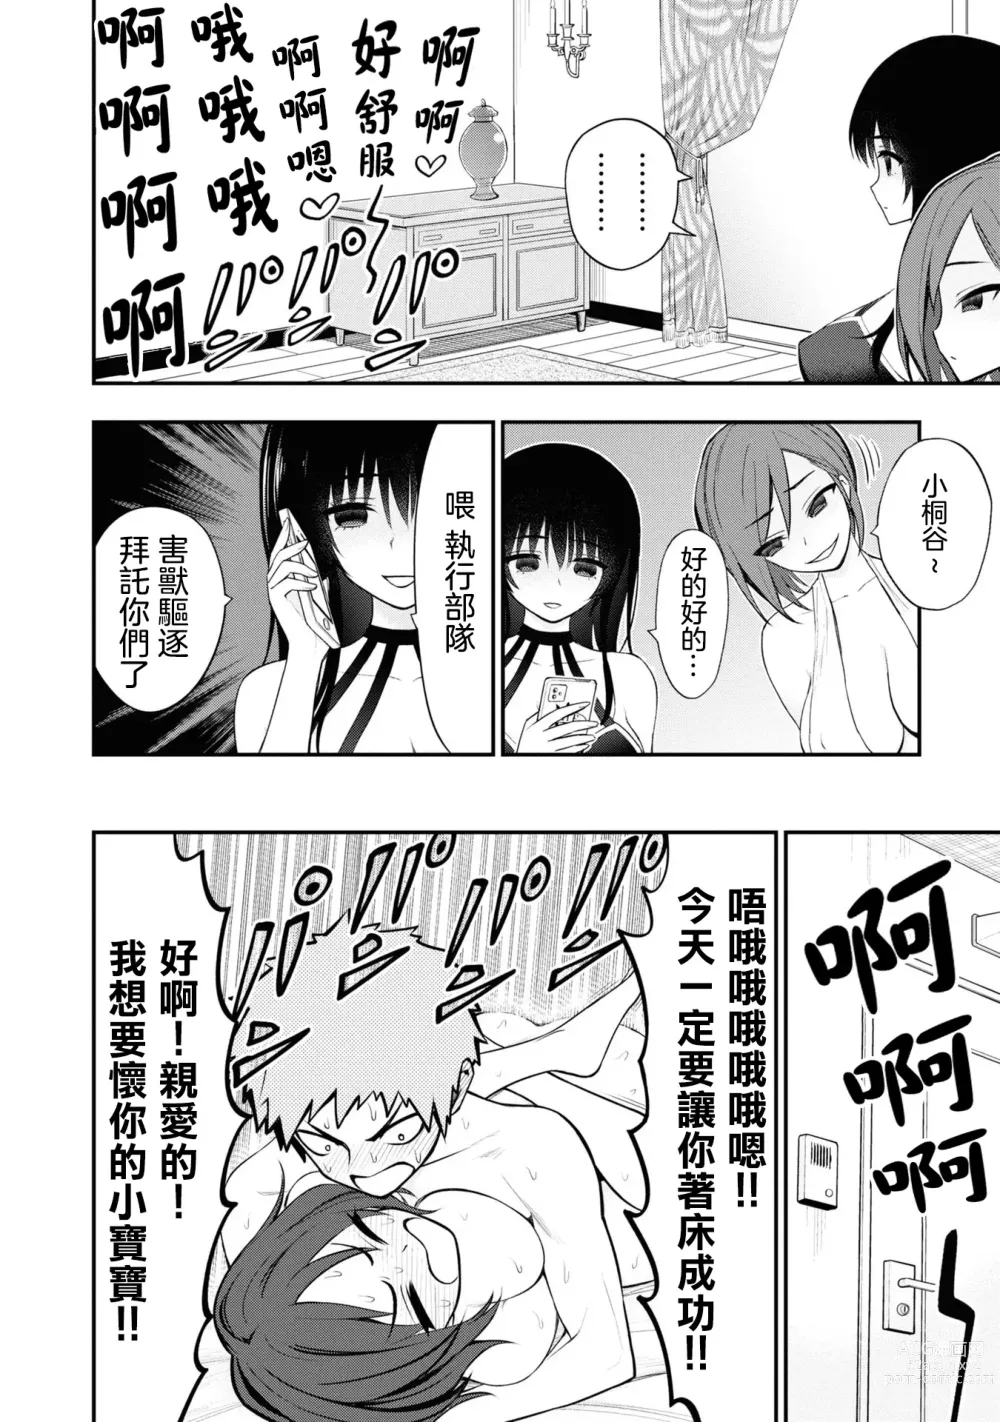 Page 7 of manga 淫獄小區 VOL.3